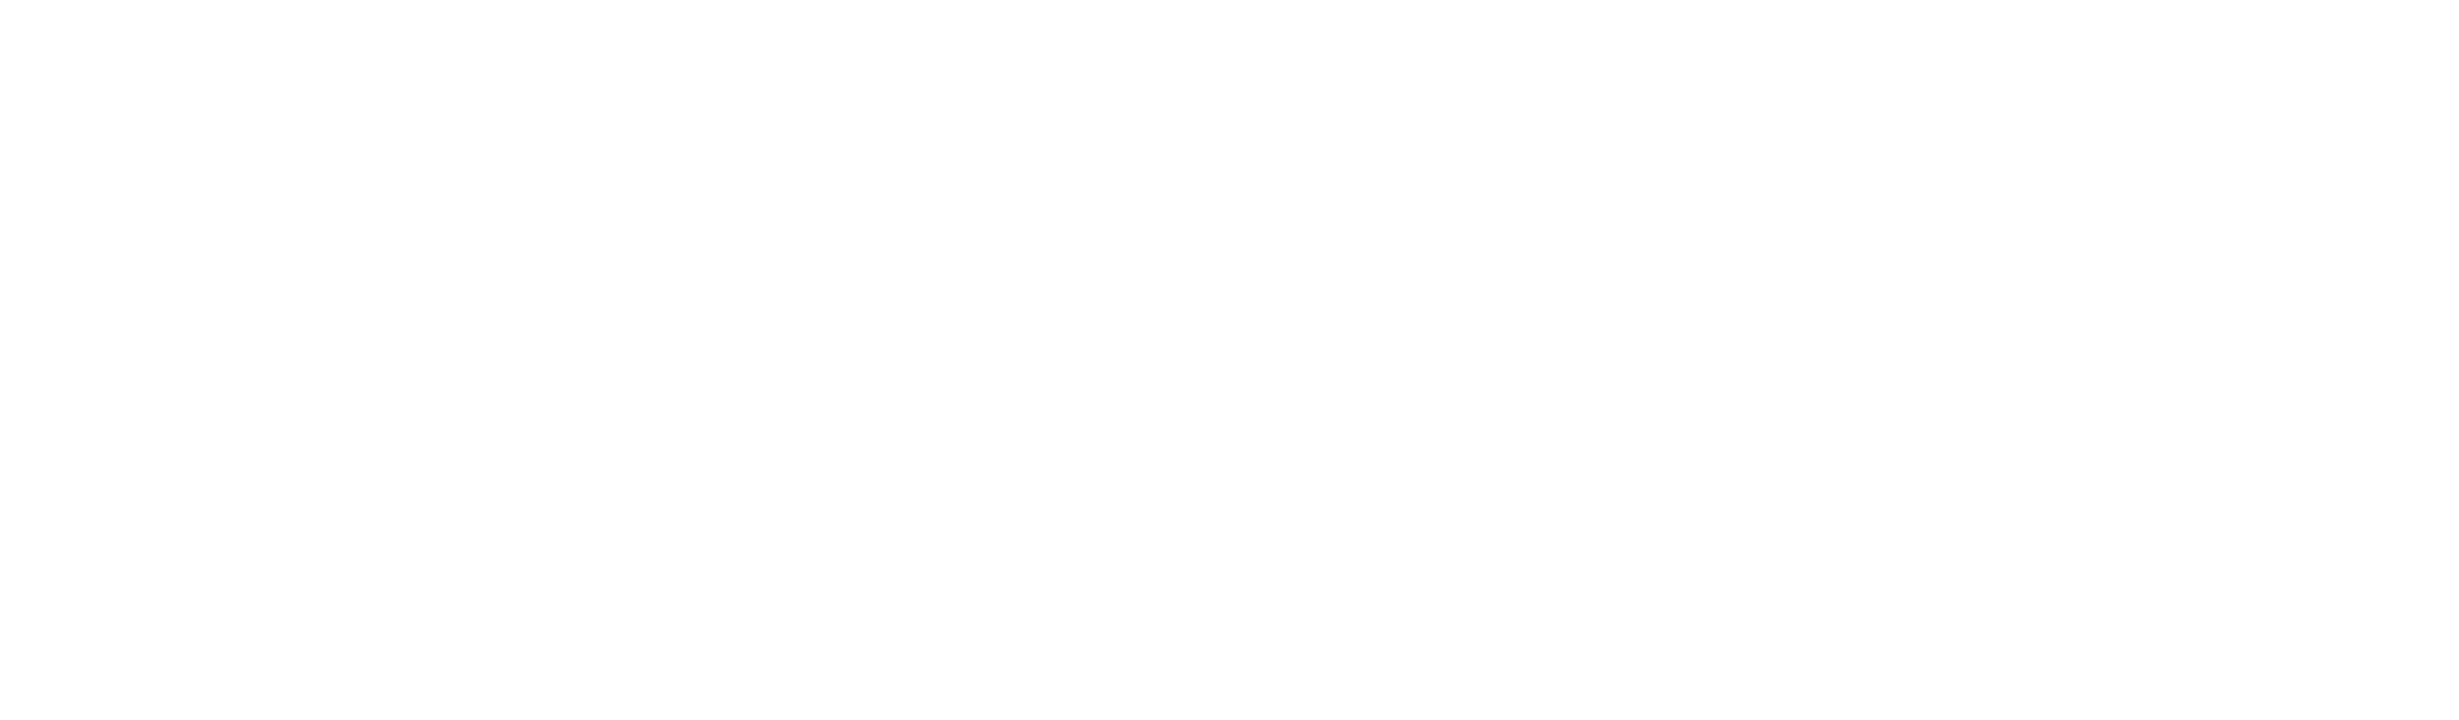 Pfadfinder Zistersdorf